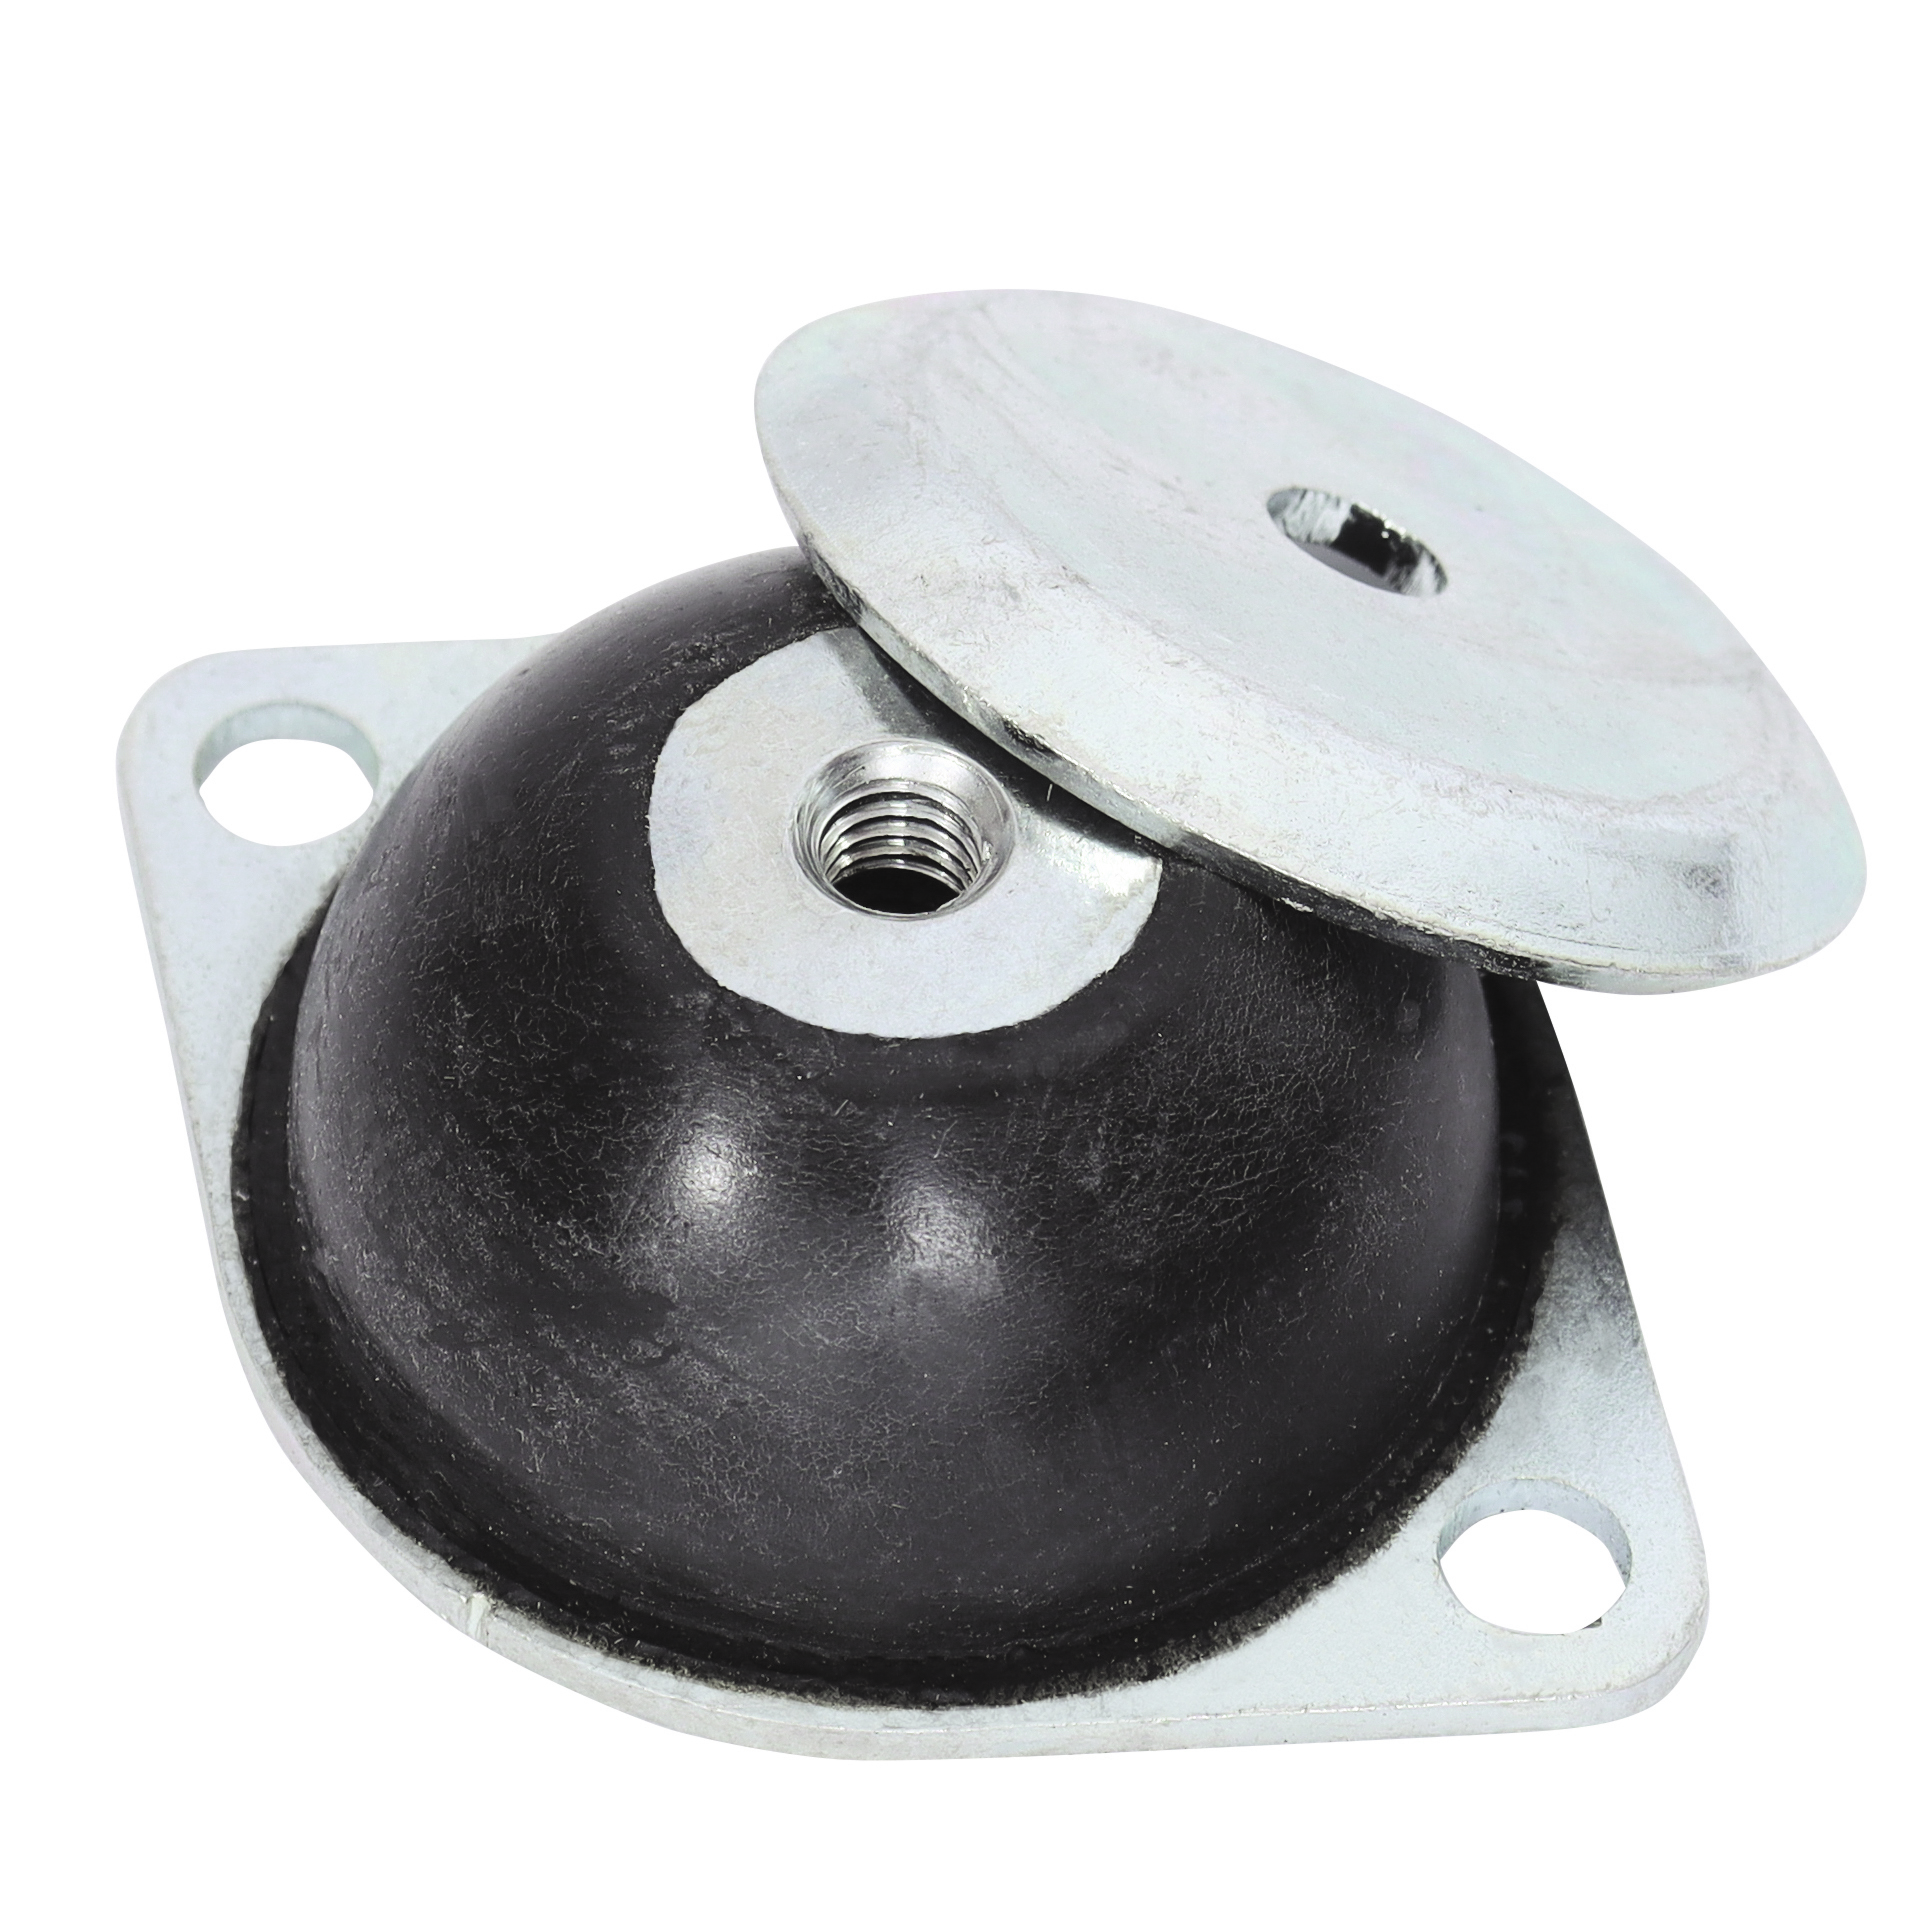 Anti-vibration machine mount - Oval base plate - 2 fixing holes - 